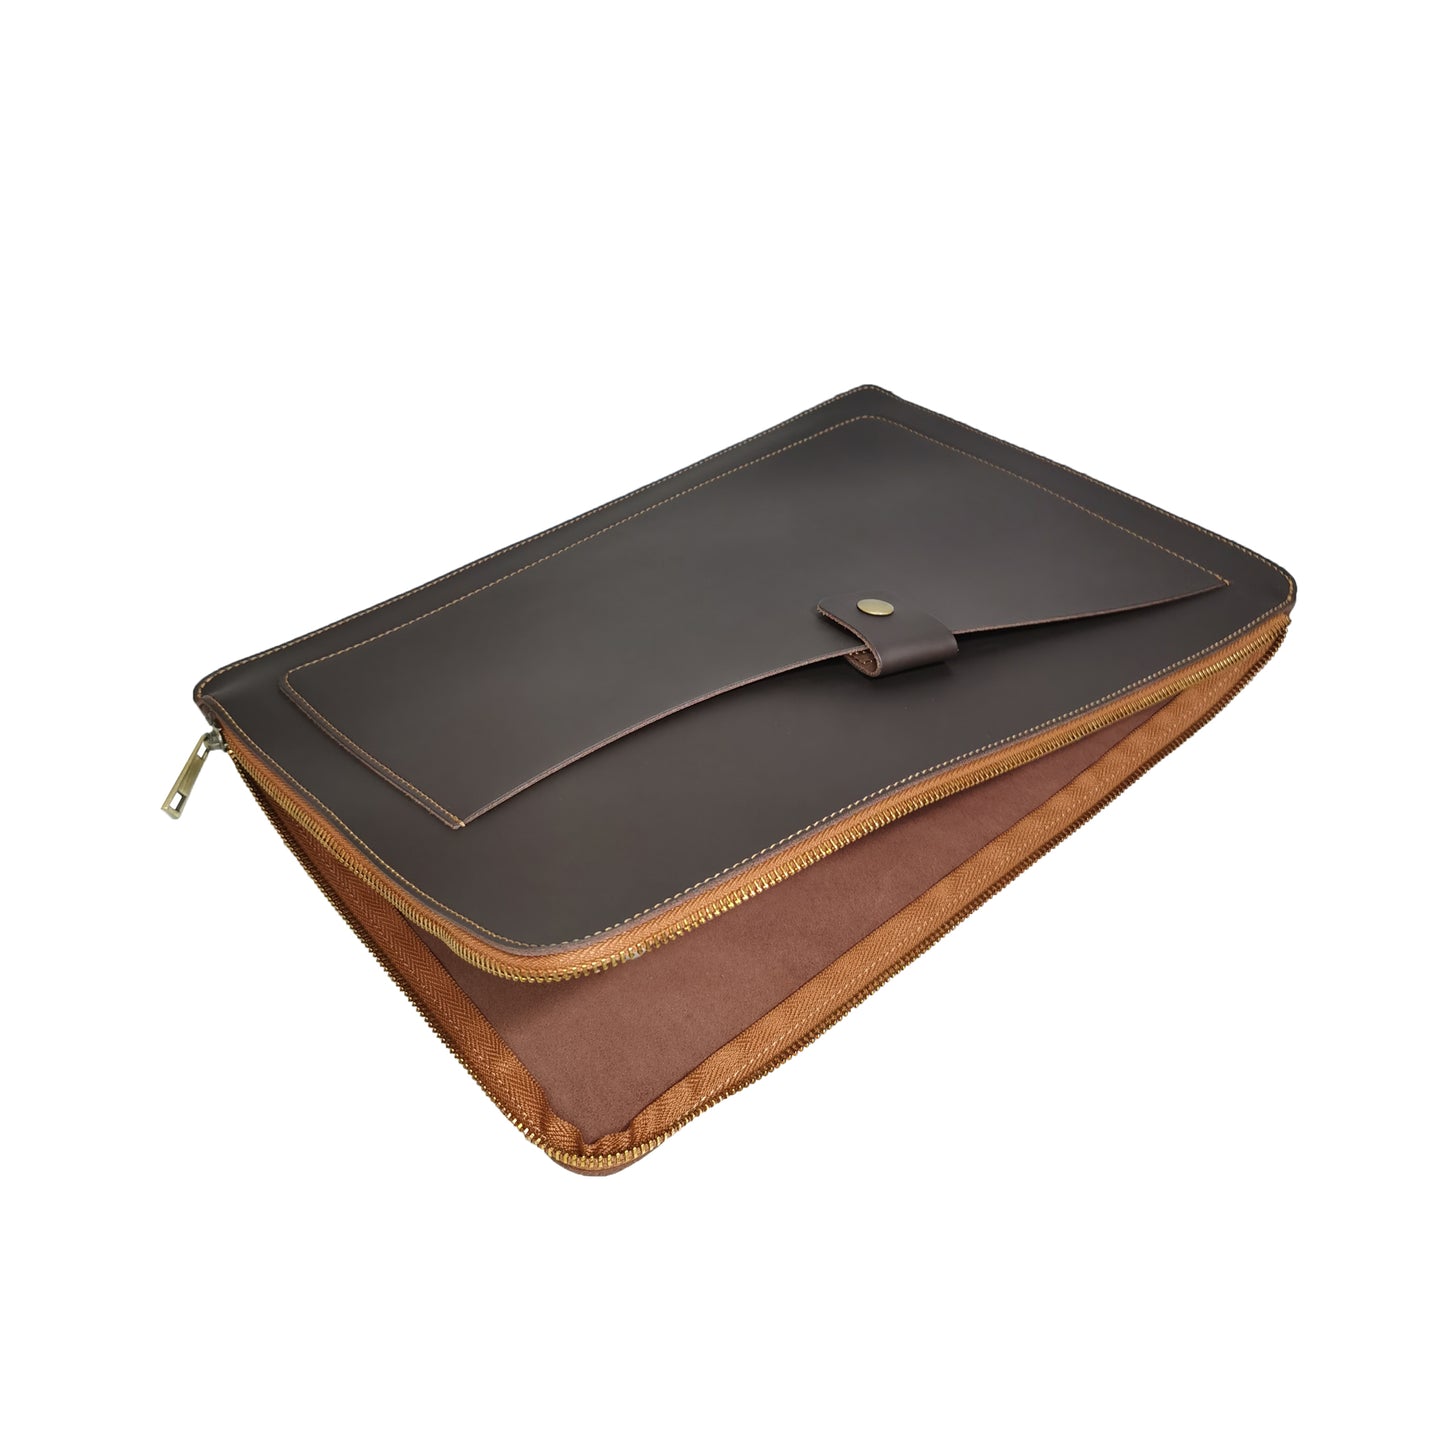 Unisex genuine cowhide leather laptop sleeve